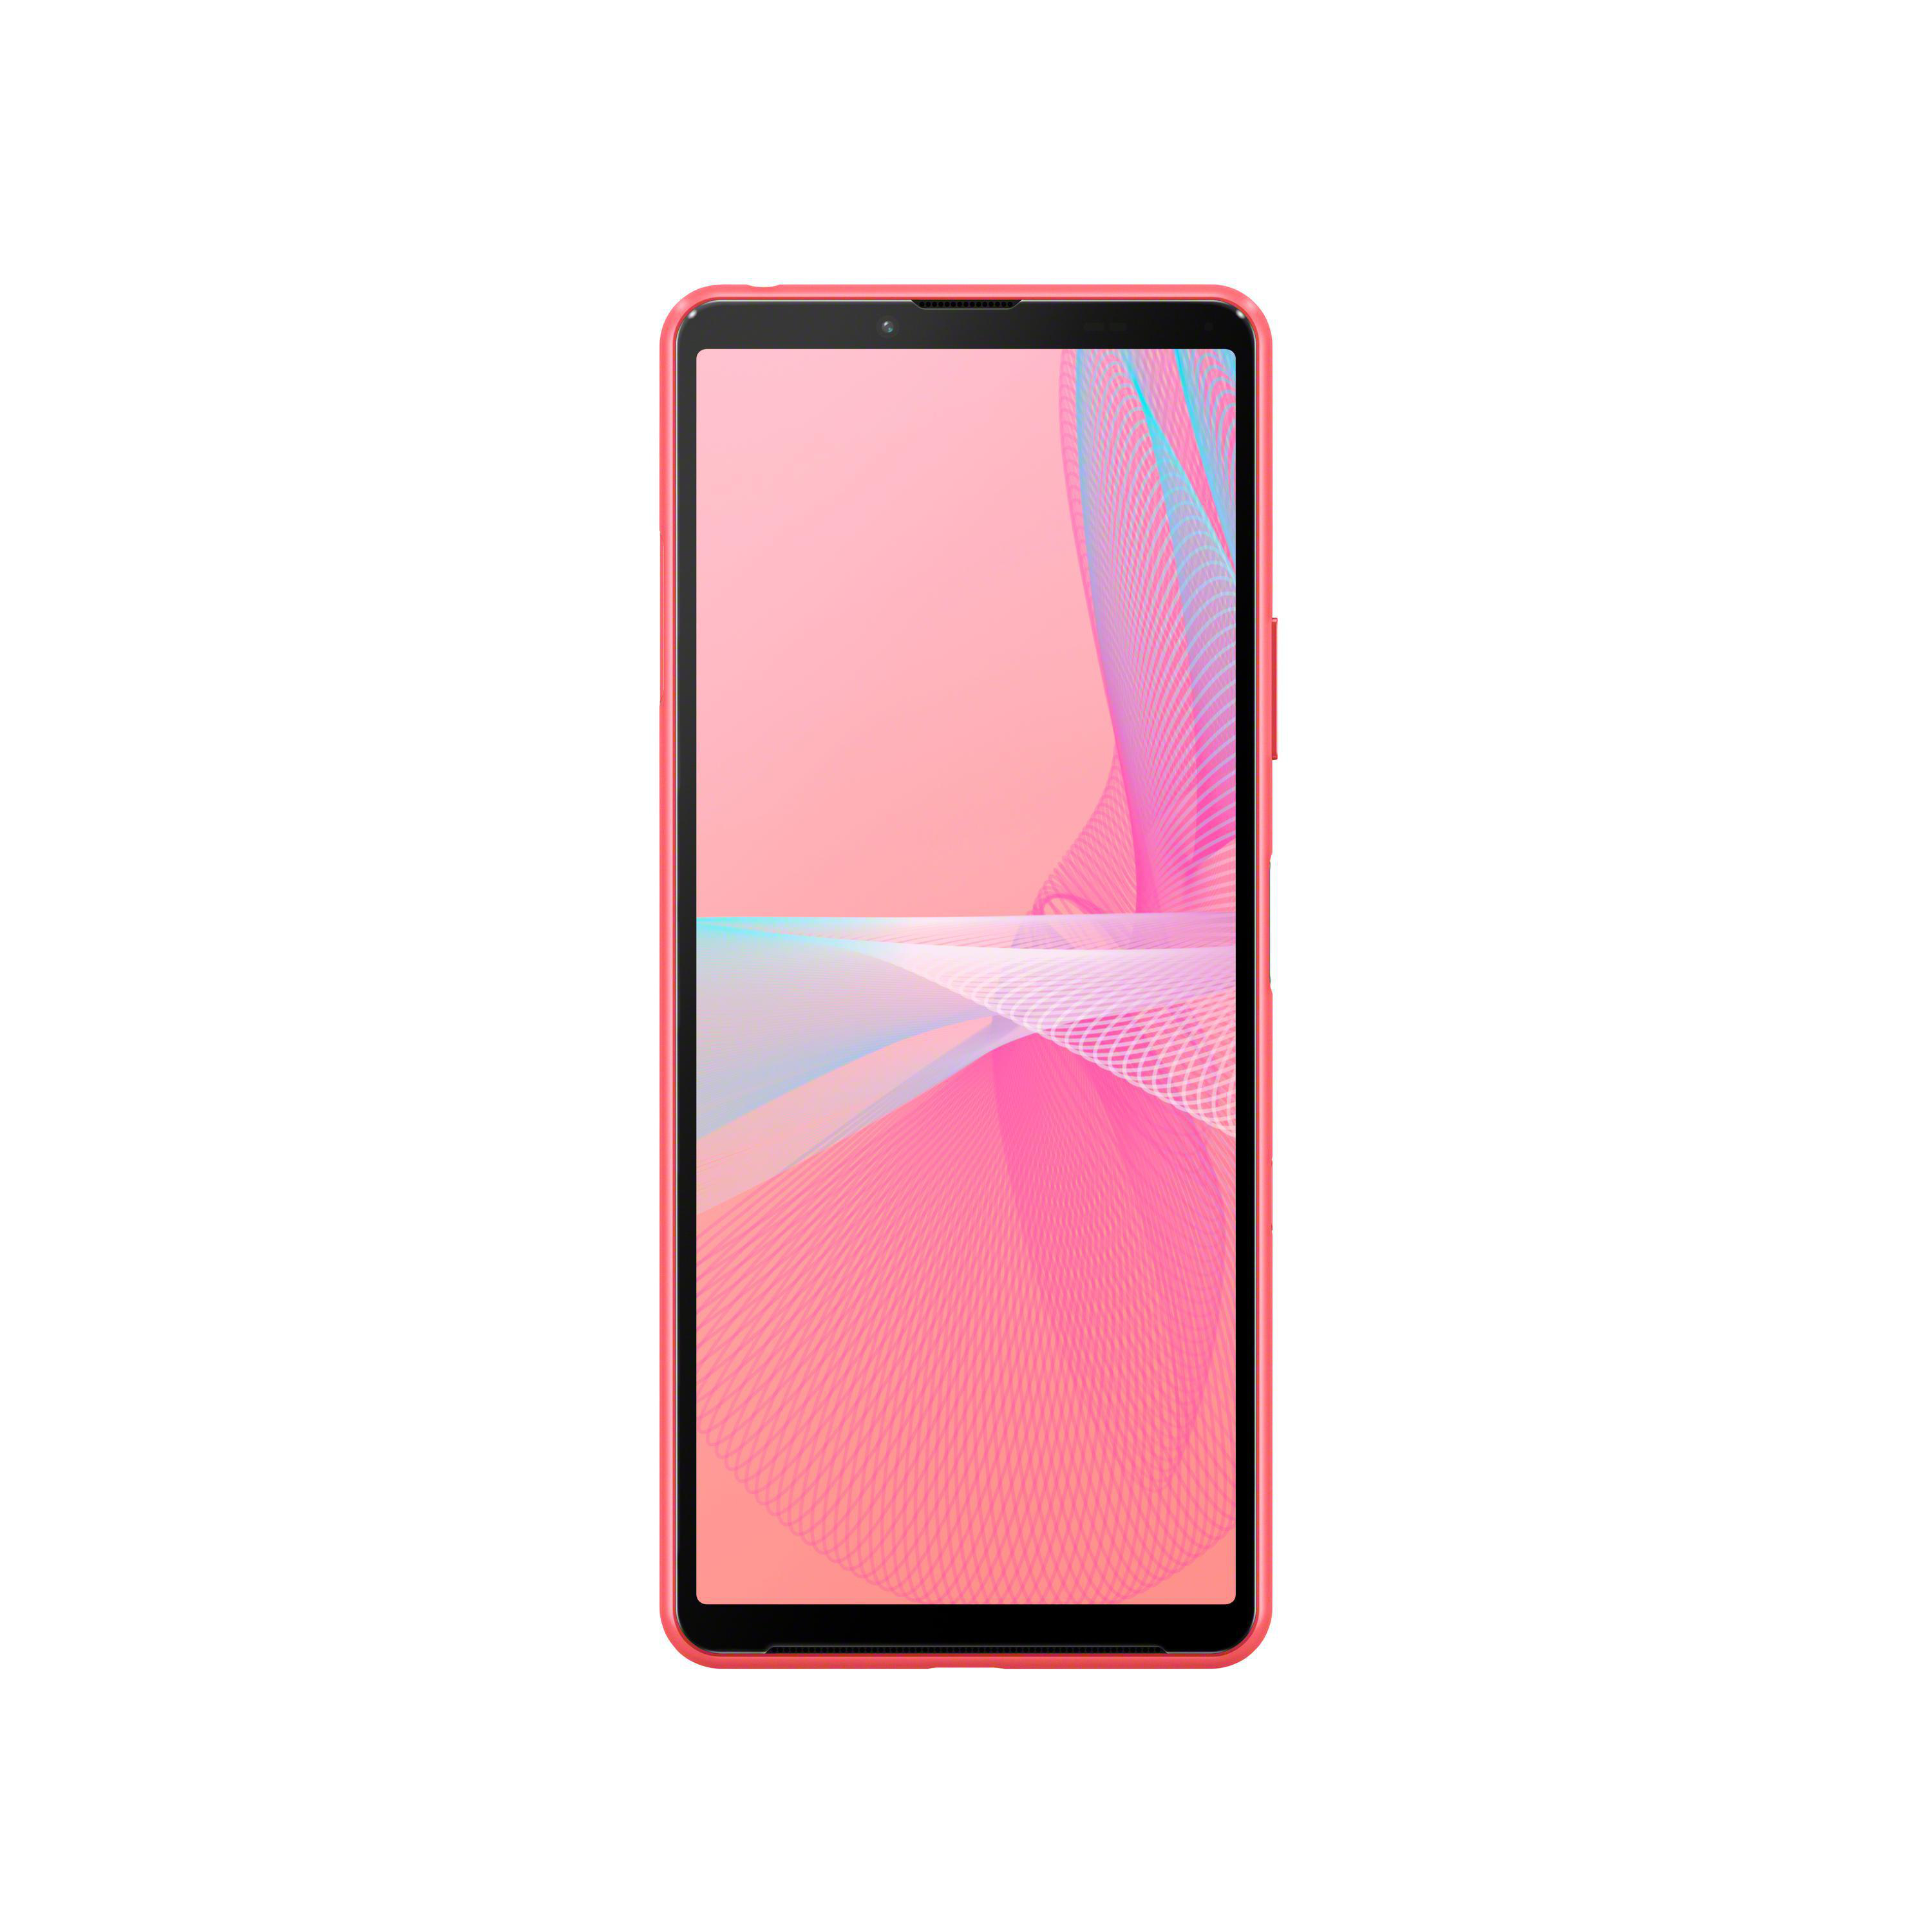 SONY Xperia SIM 21:9 128 III Dual GB 5G 10 Display Pink